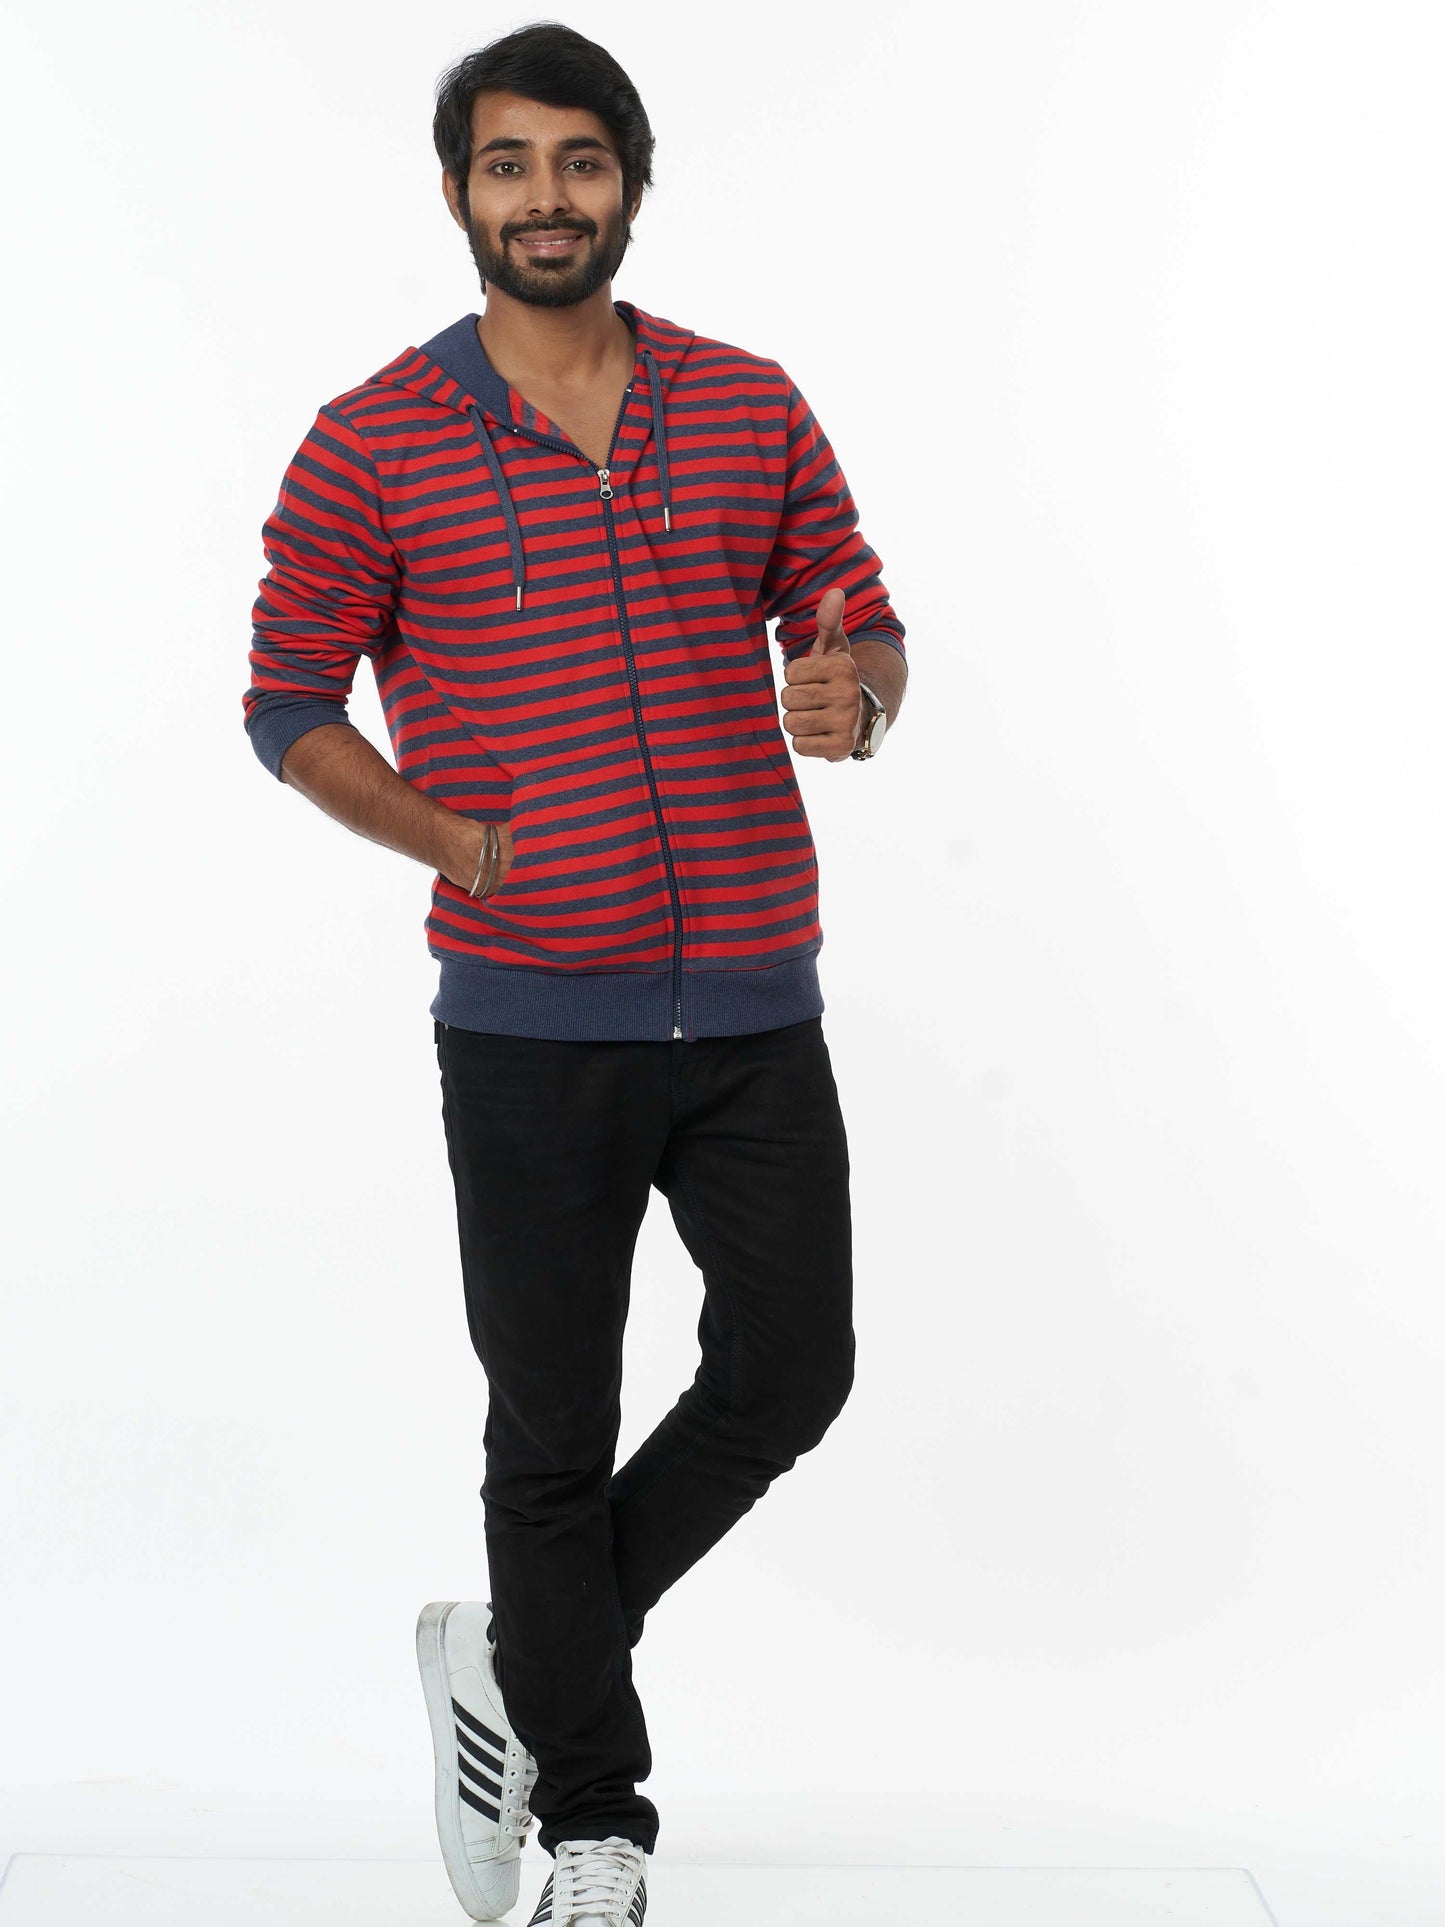 Stylish Men's Hooded Sweatshirt- Black Red Stripes